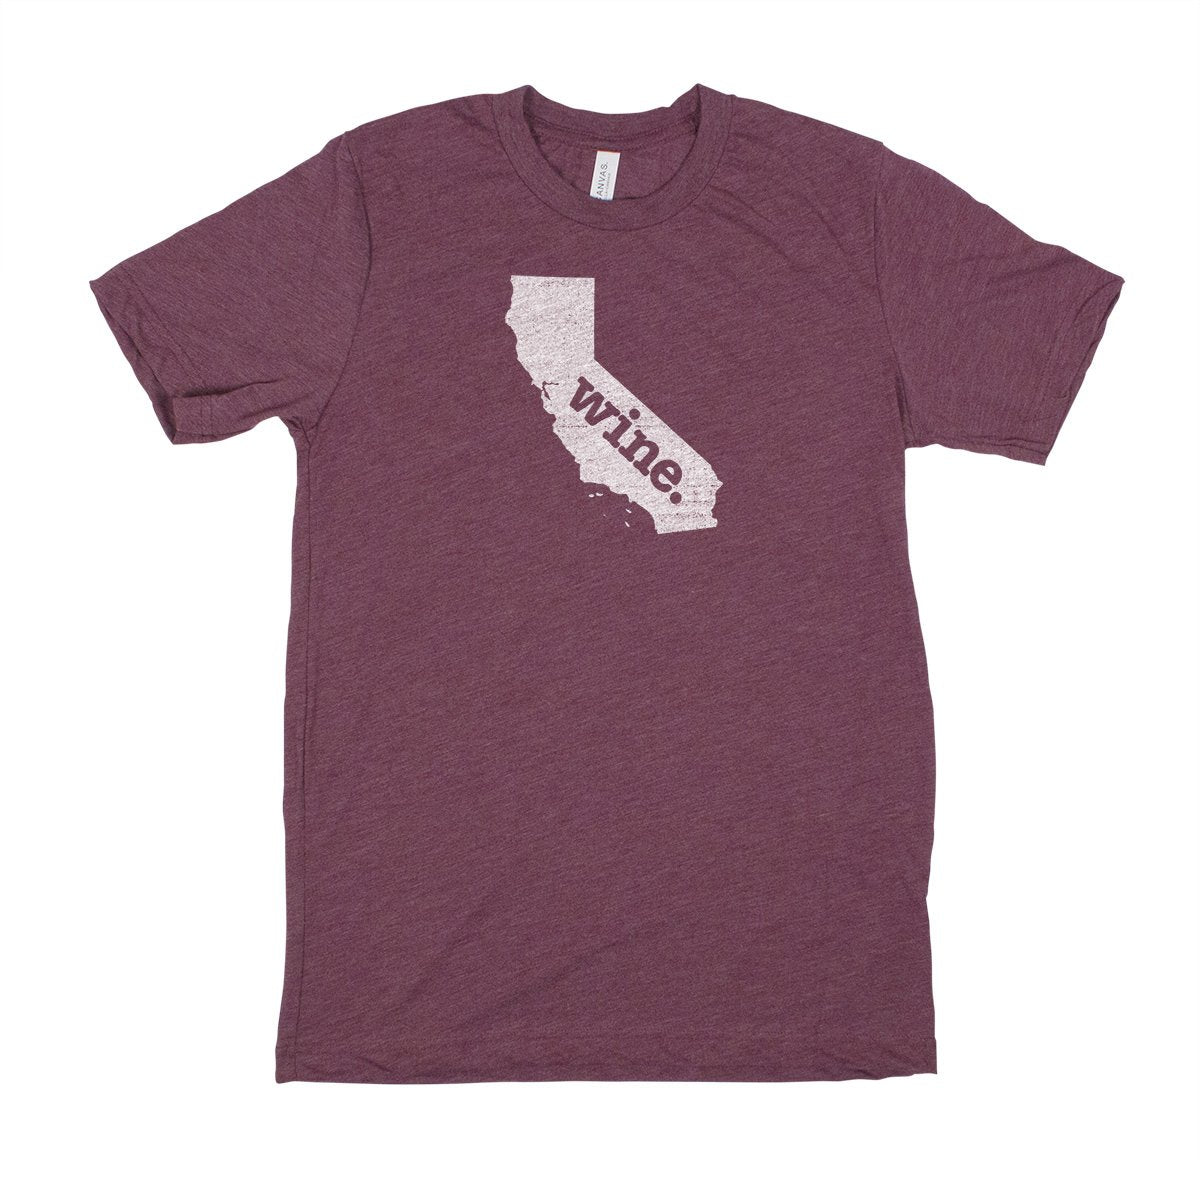 fish. Men's Unisex T-Shirt - New Hampshire